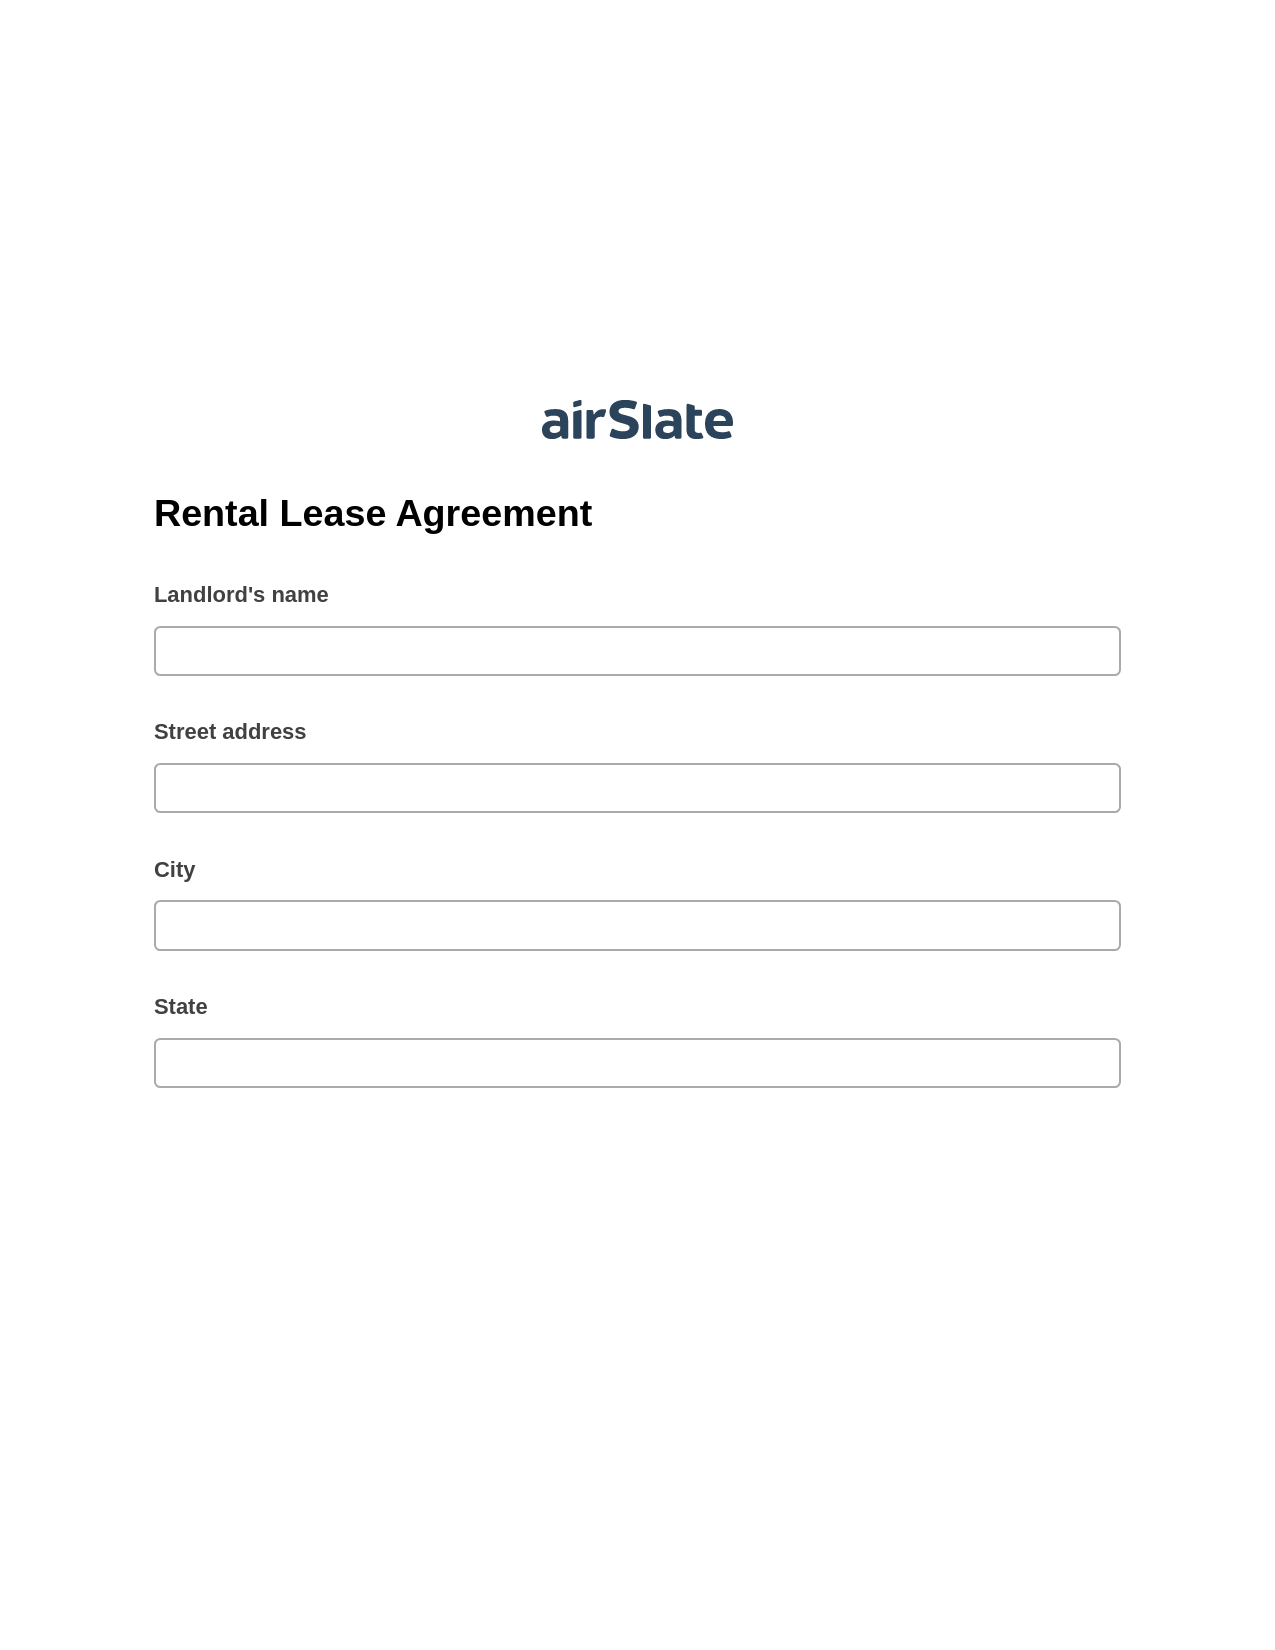 Rental Lease Agreement Pre-fill from MySQL Dropdown Options Bot, Create Slate every Google Sheet Update Bot, Google Drive Bot